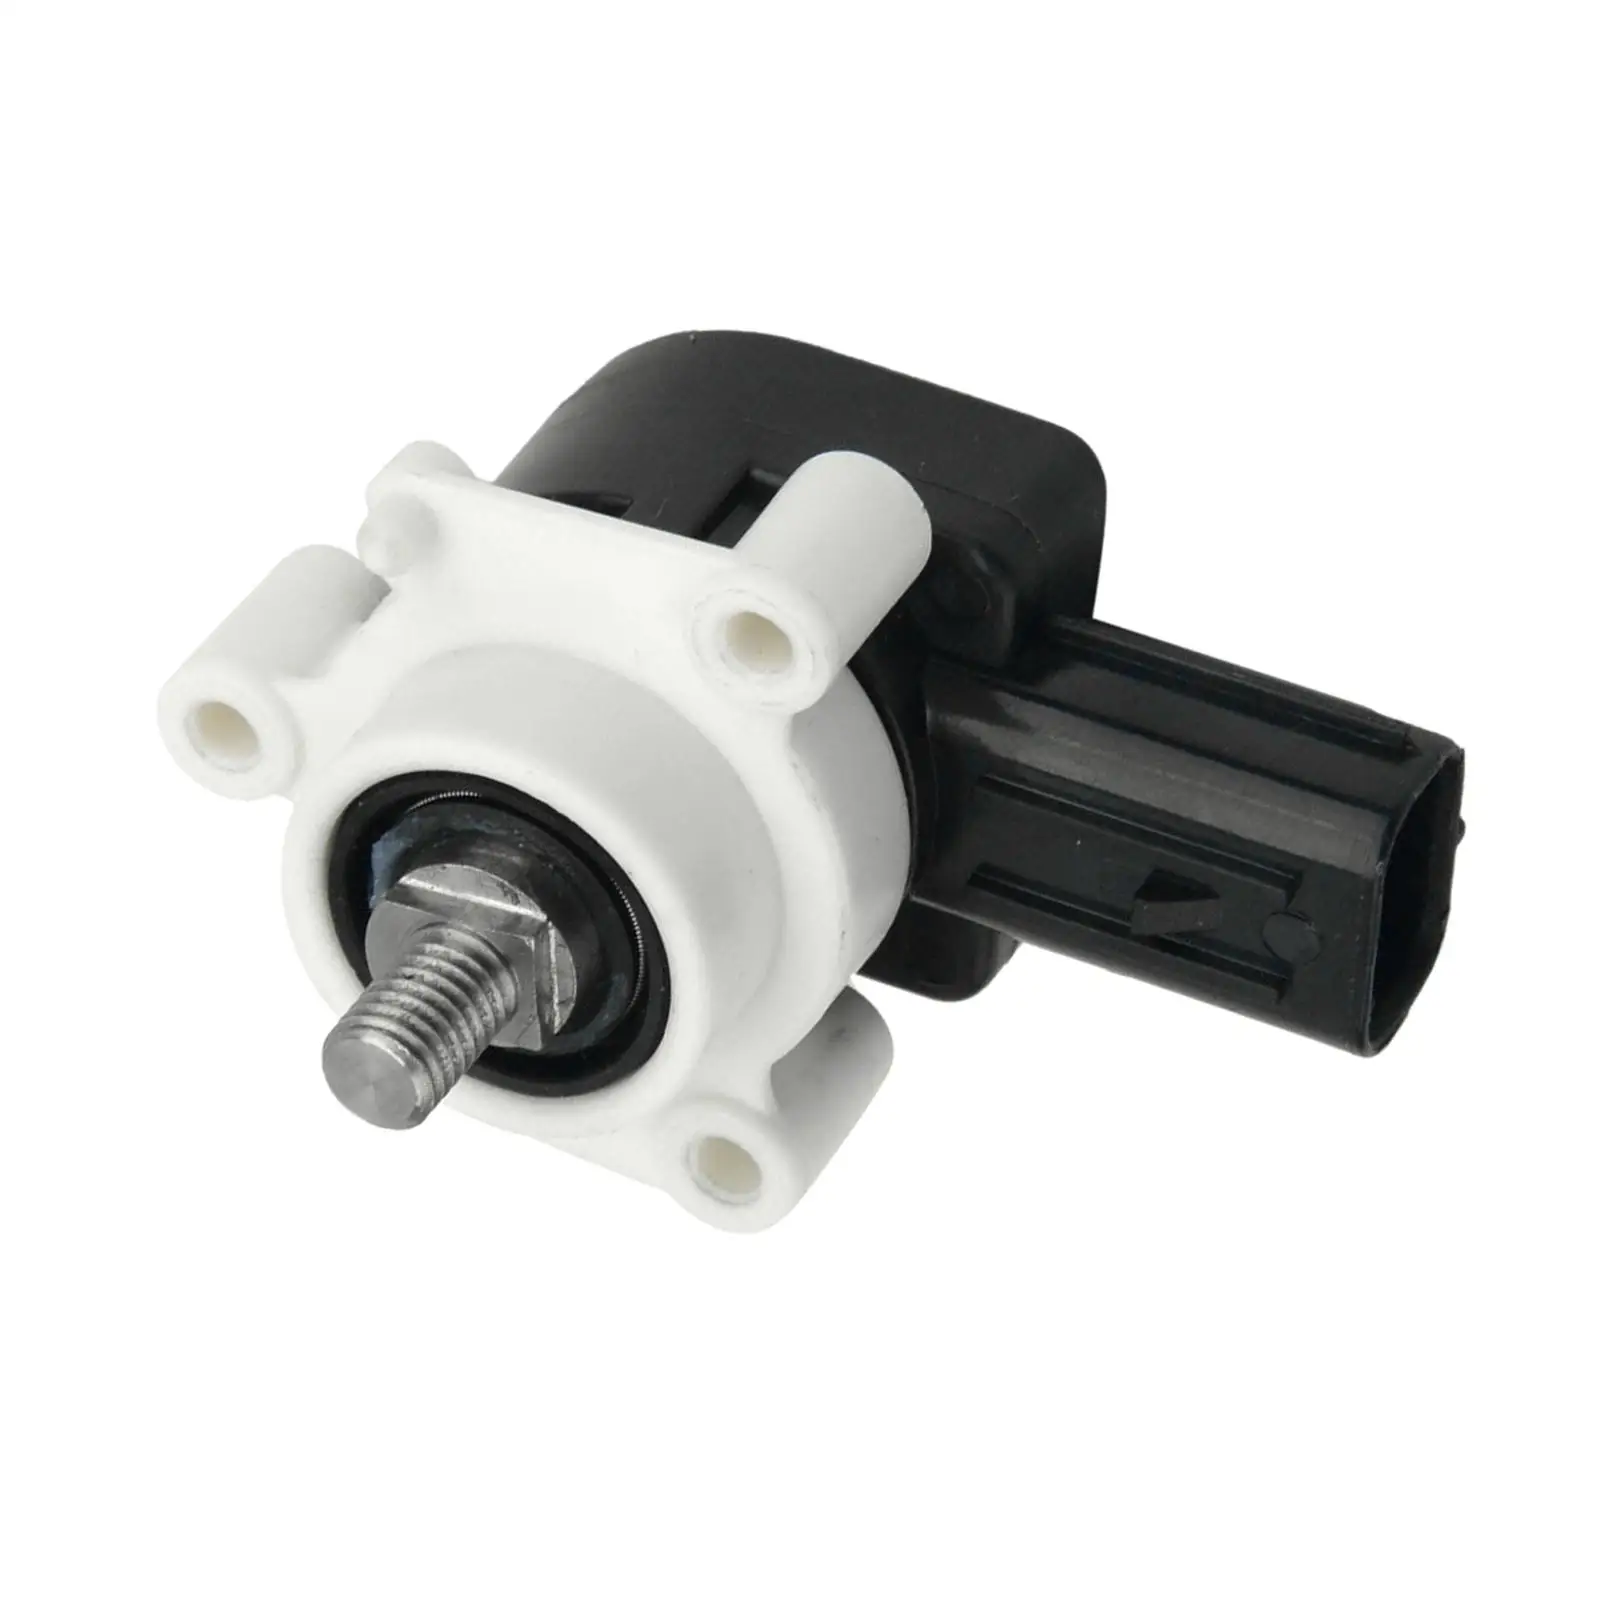 Headlight Level Sensor 89407-60040 for Toyota Avalon for camry Accessories